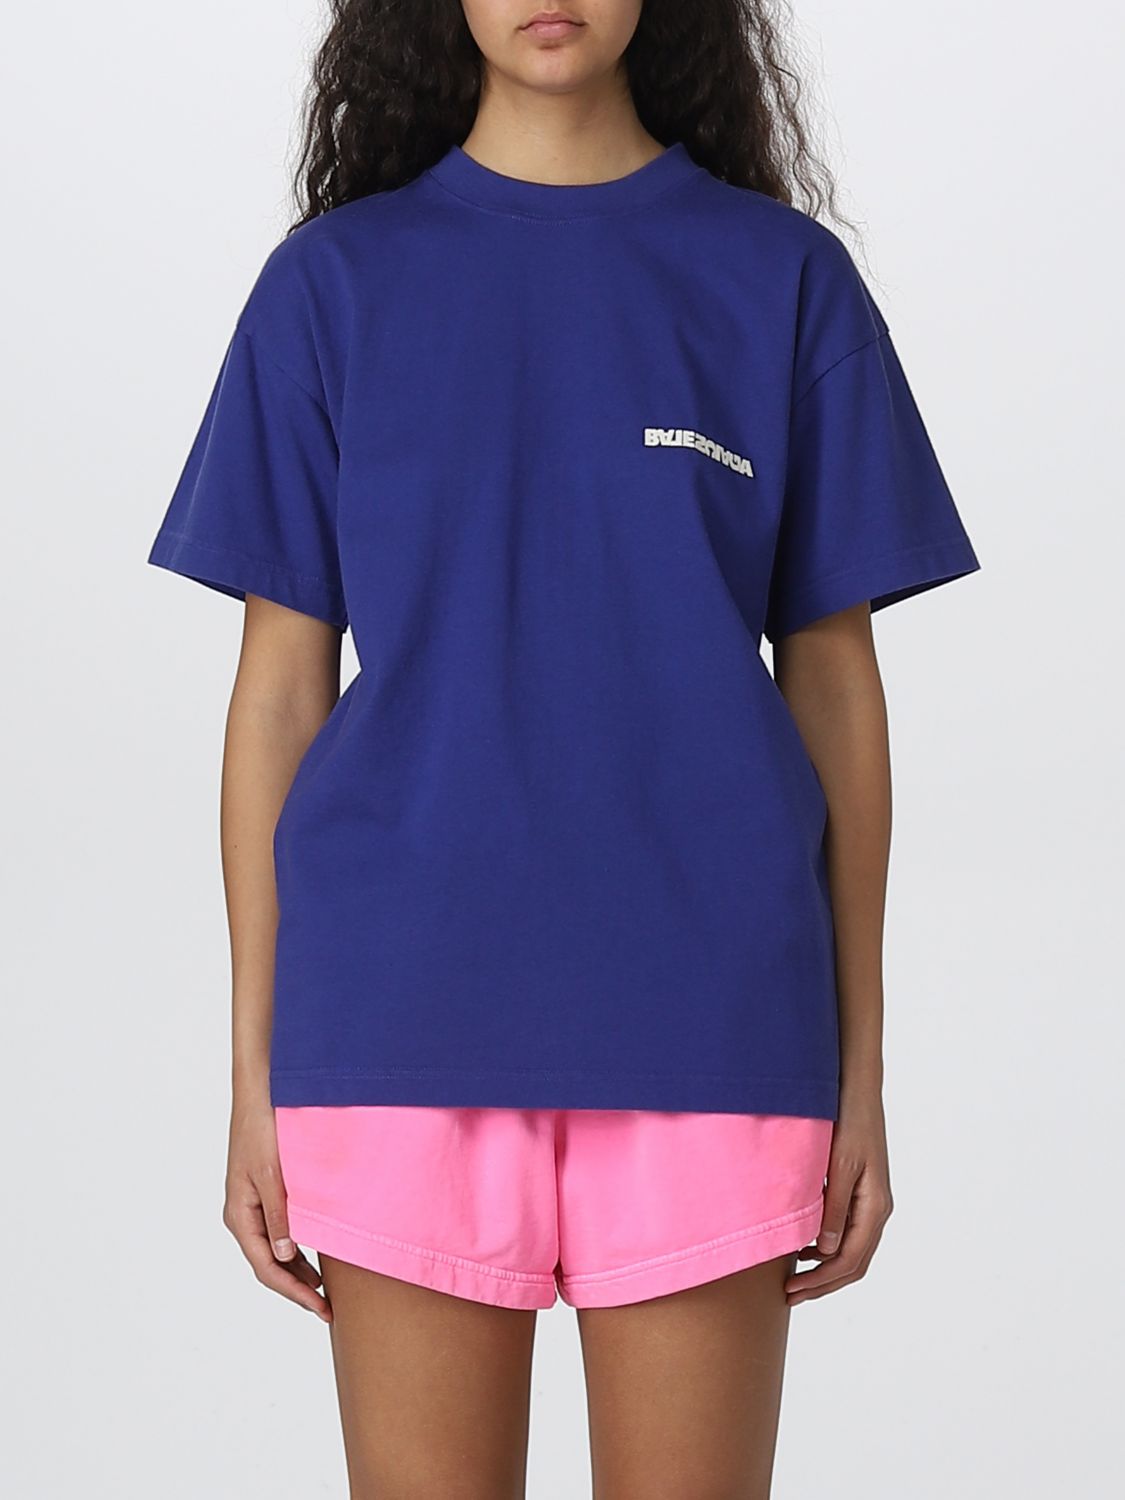 BALENCIAGA: in cotton blend - Blue | Balenciaga t-shirt 612965TLVB3 online on GIGLIO.COM